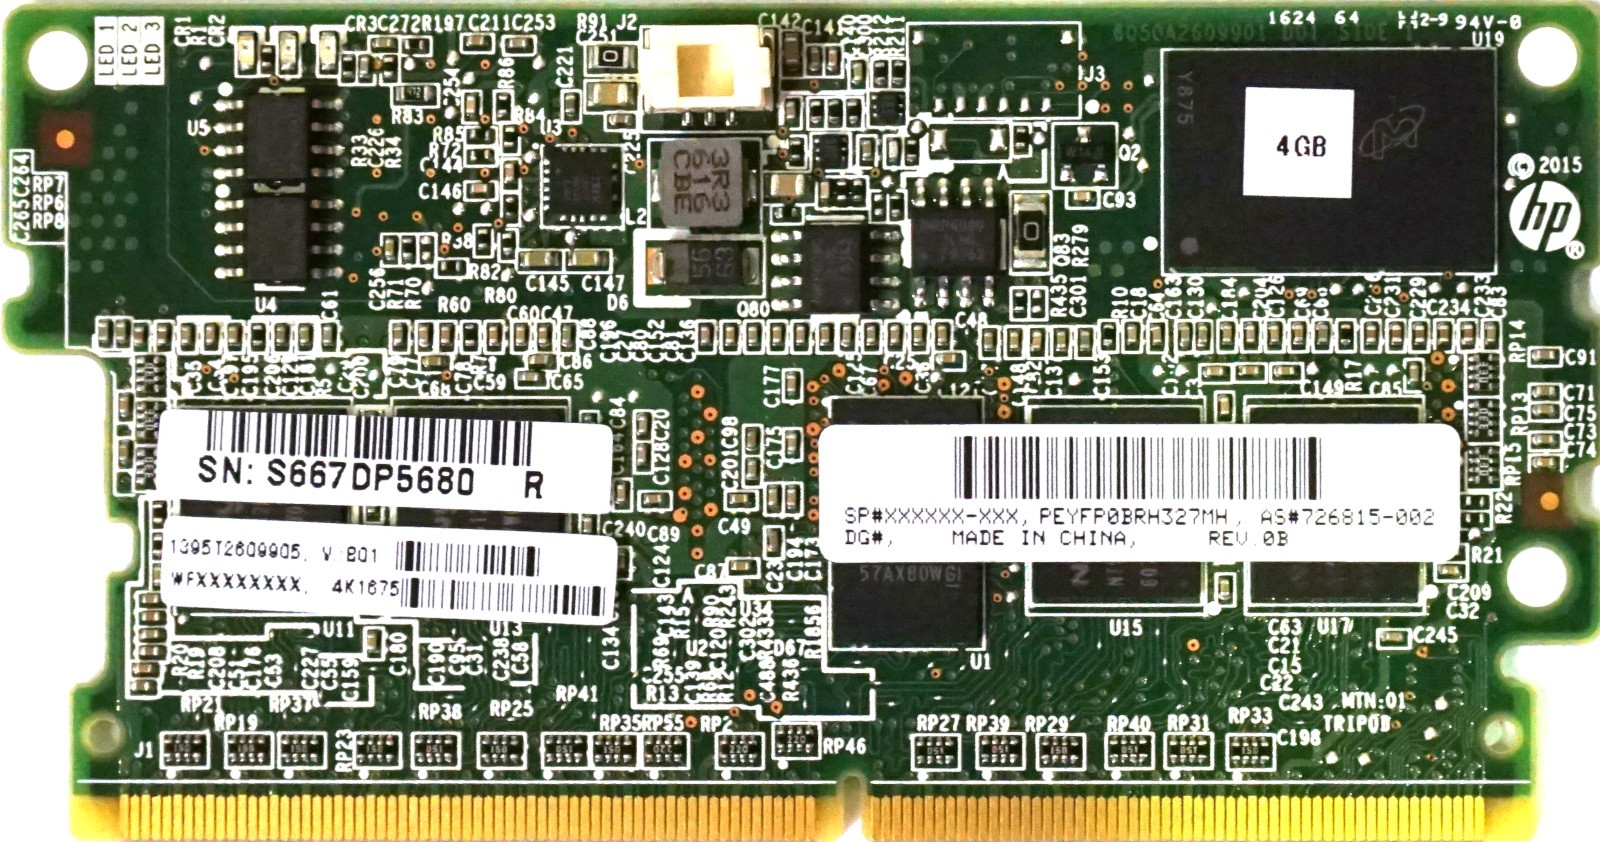 HP Smart Array P440, P840 4GB FBWC Controller Memory